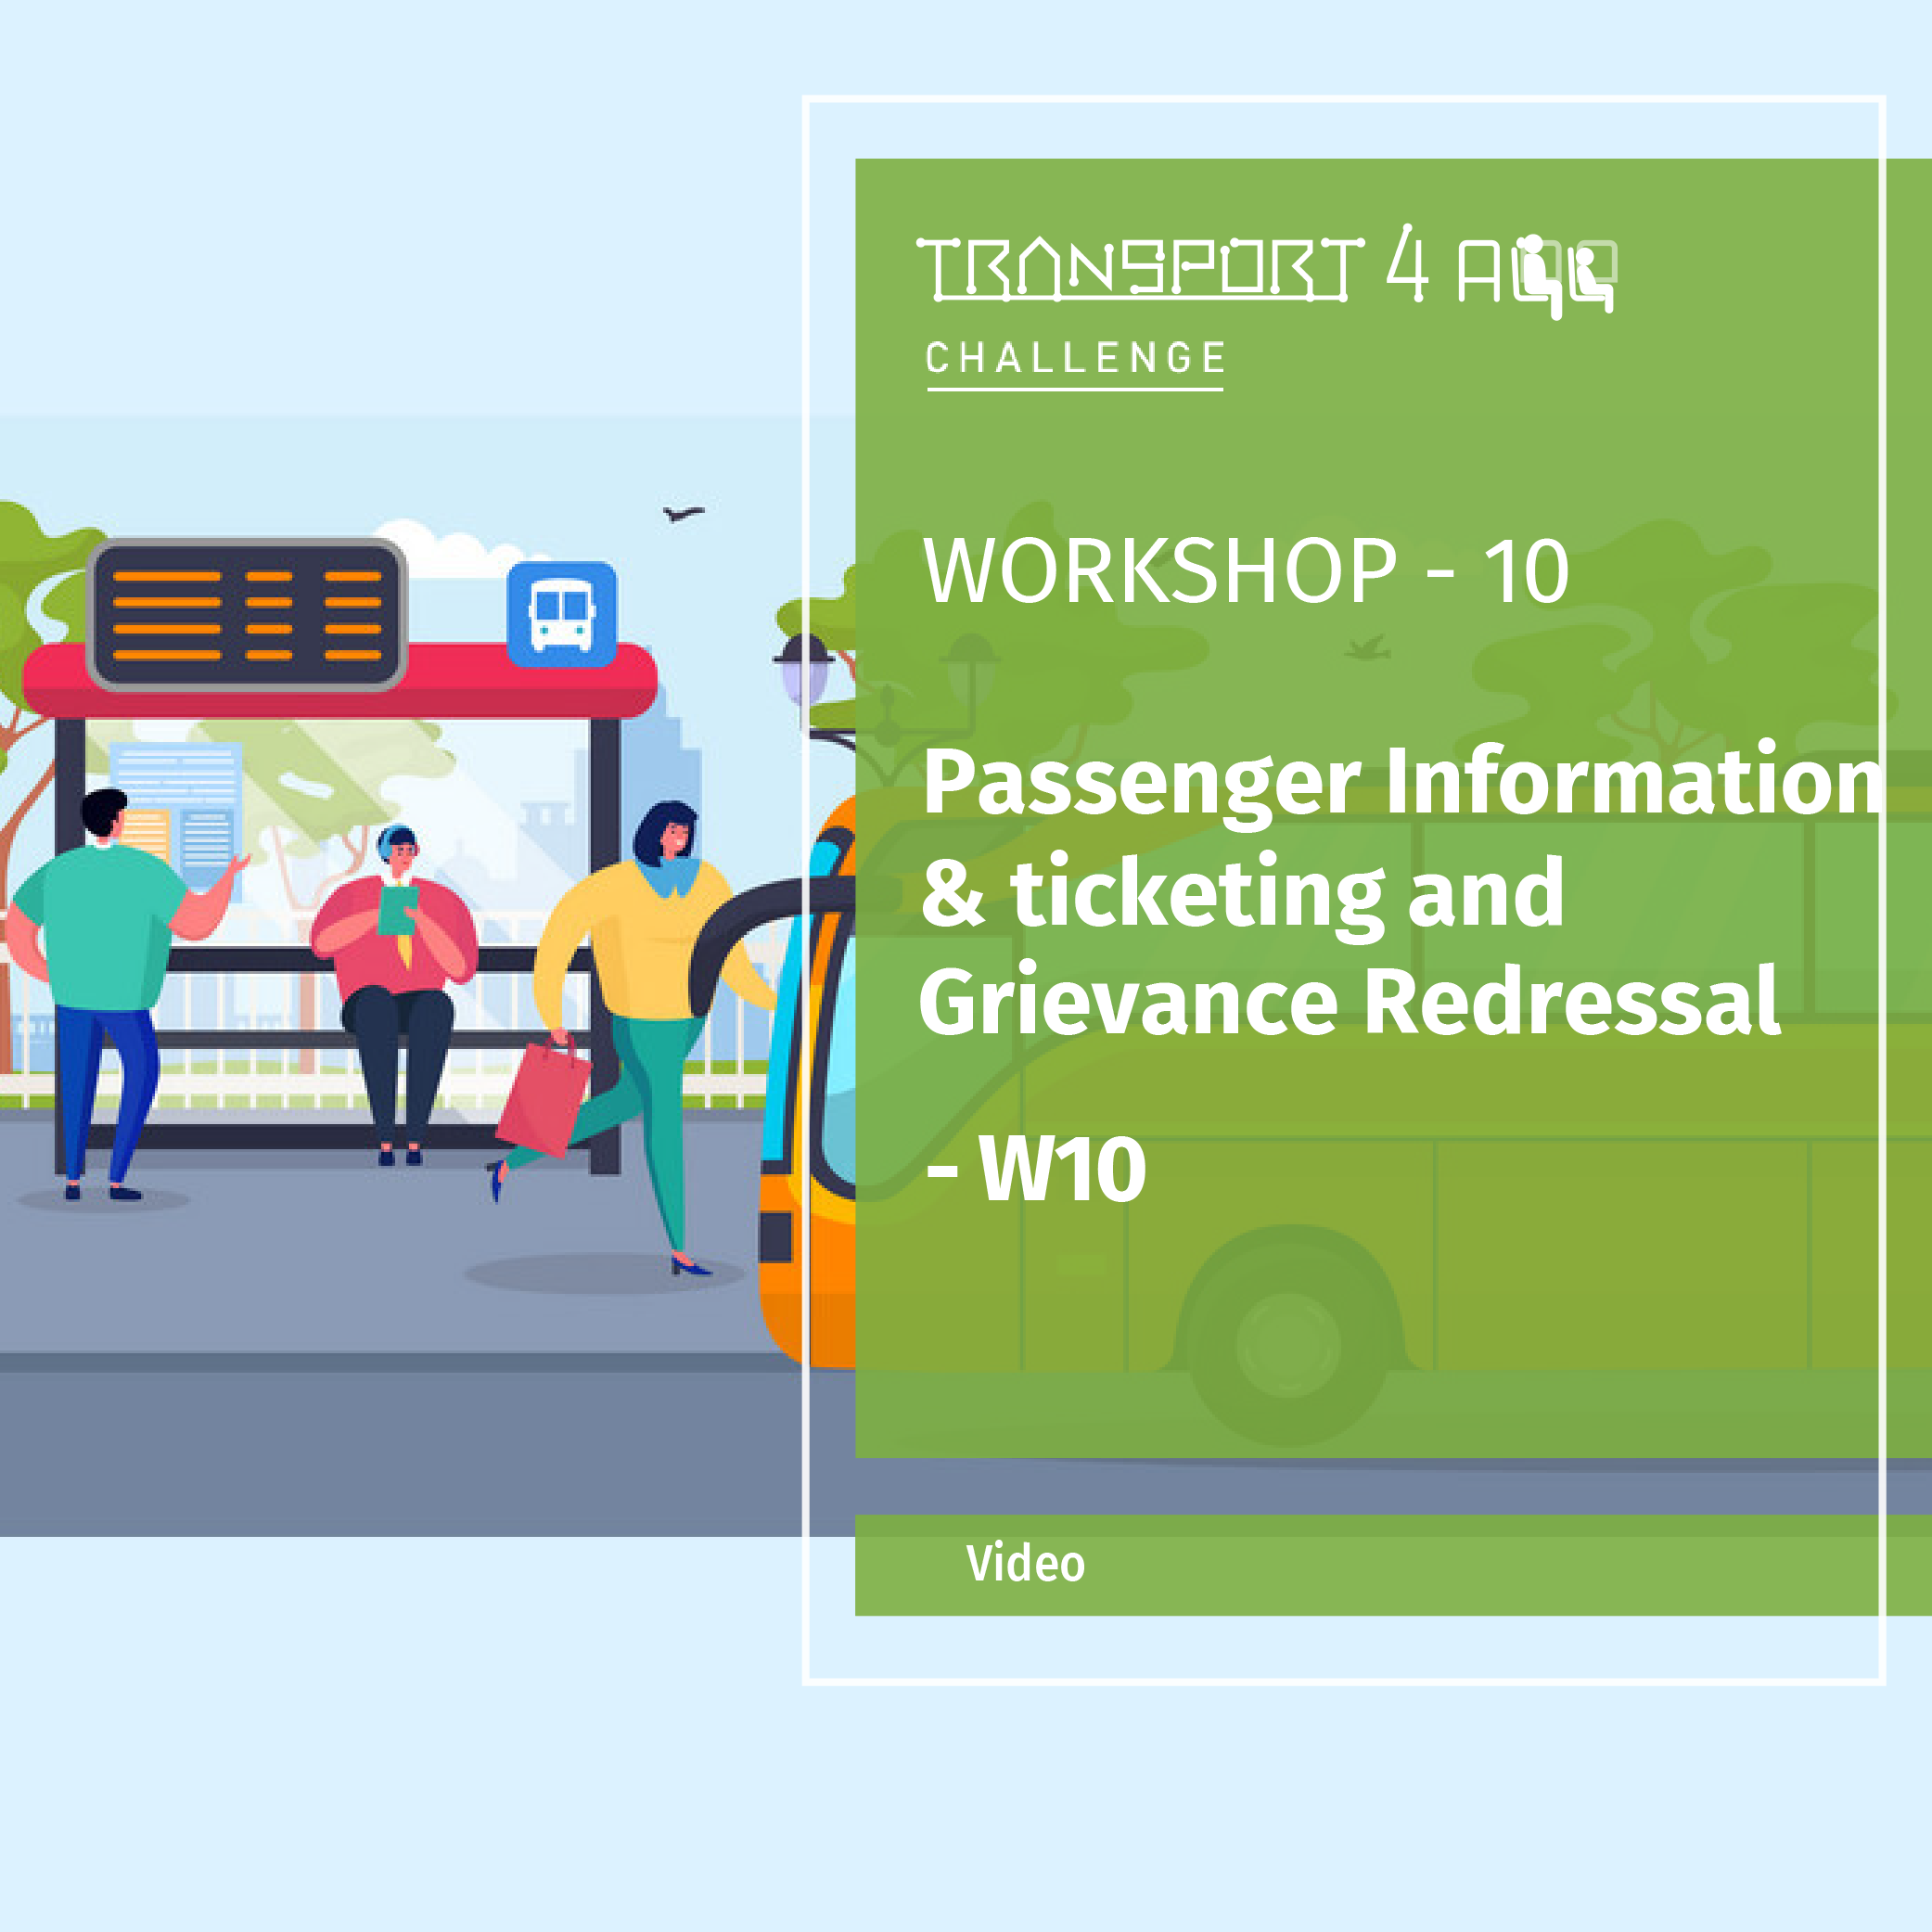 Workshop on Passenger Information & Ticketing and Grievance Redressal